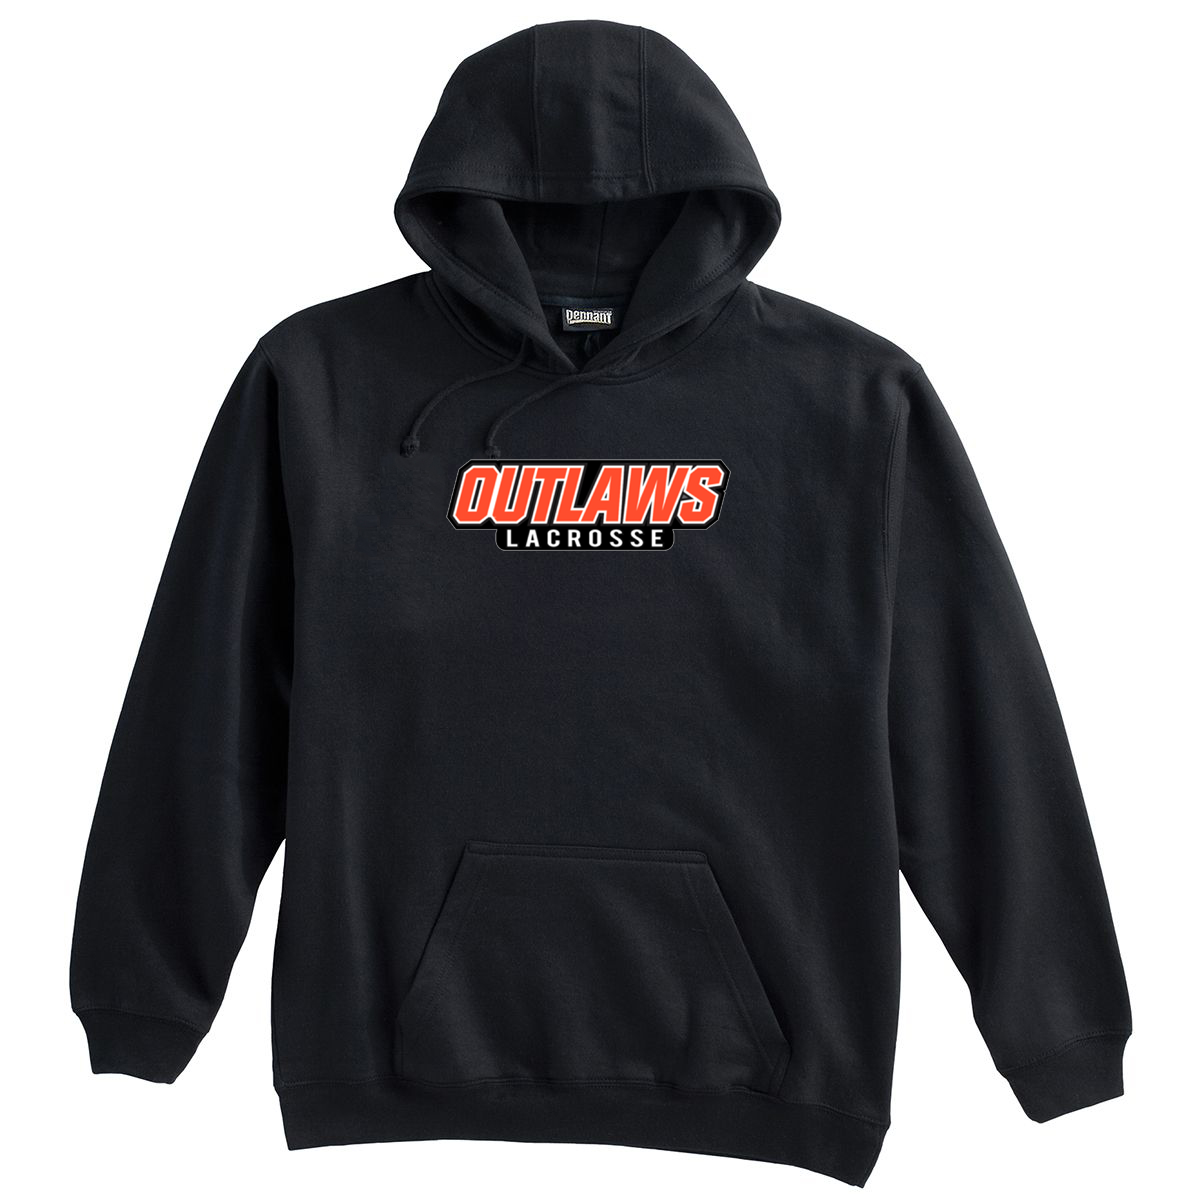 Outlaws Lacrosse Sweatshirt